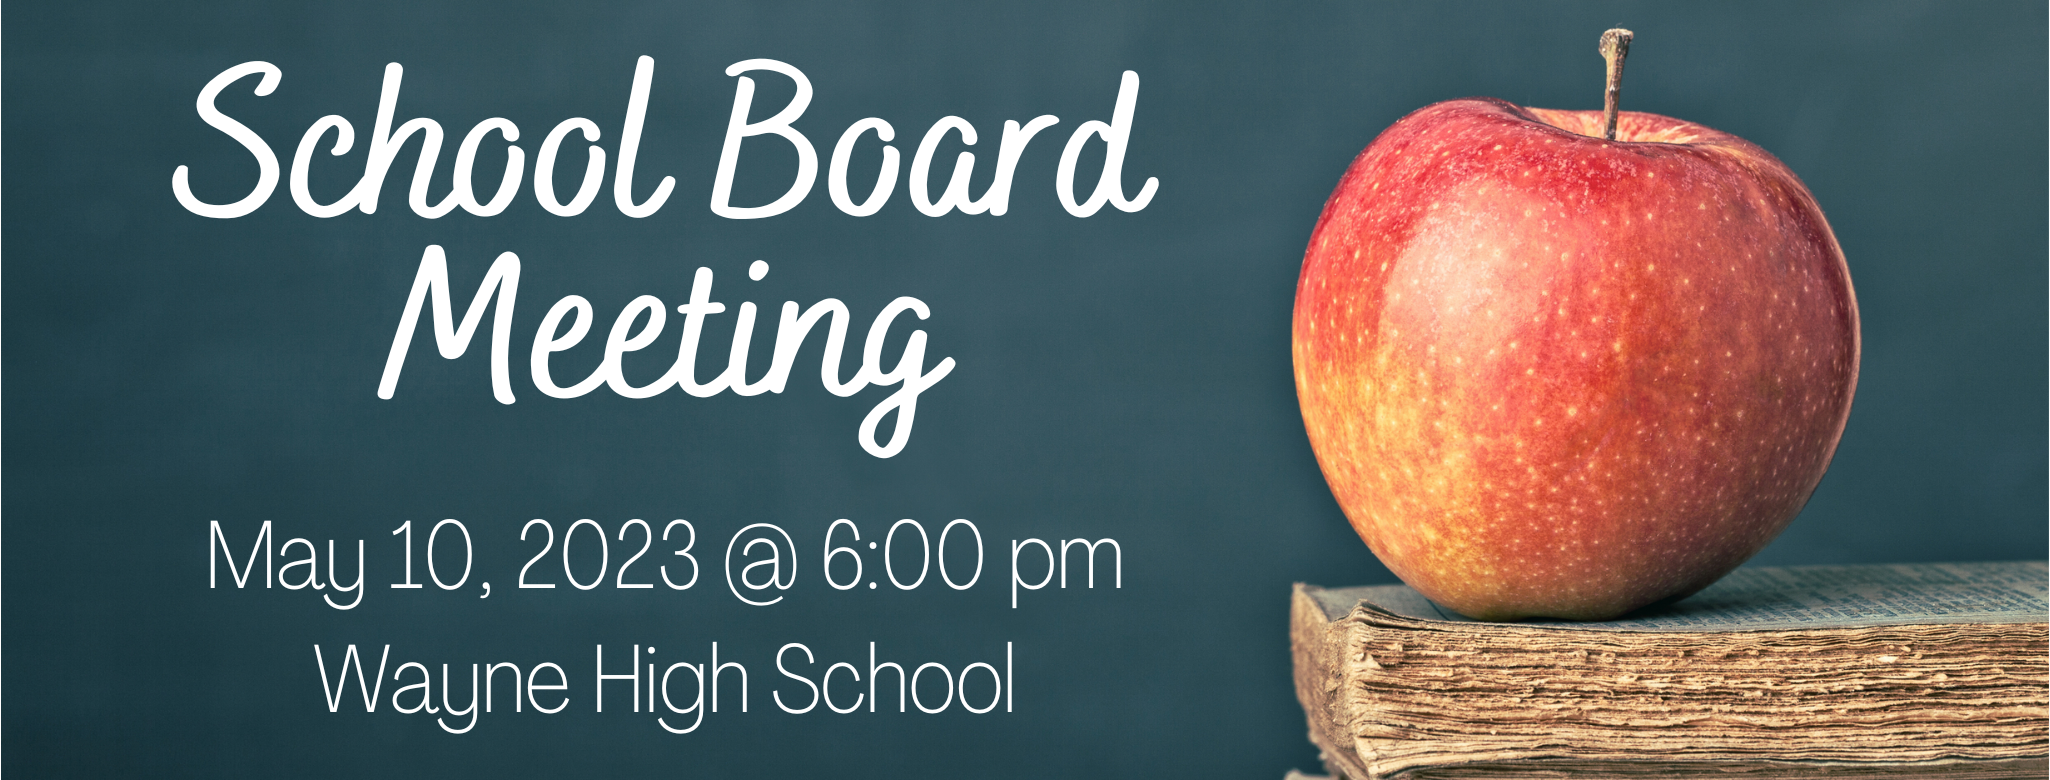 School Board Meeting 9